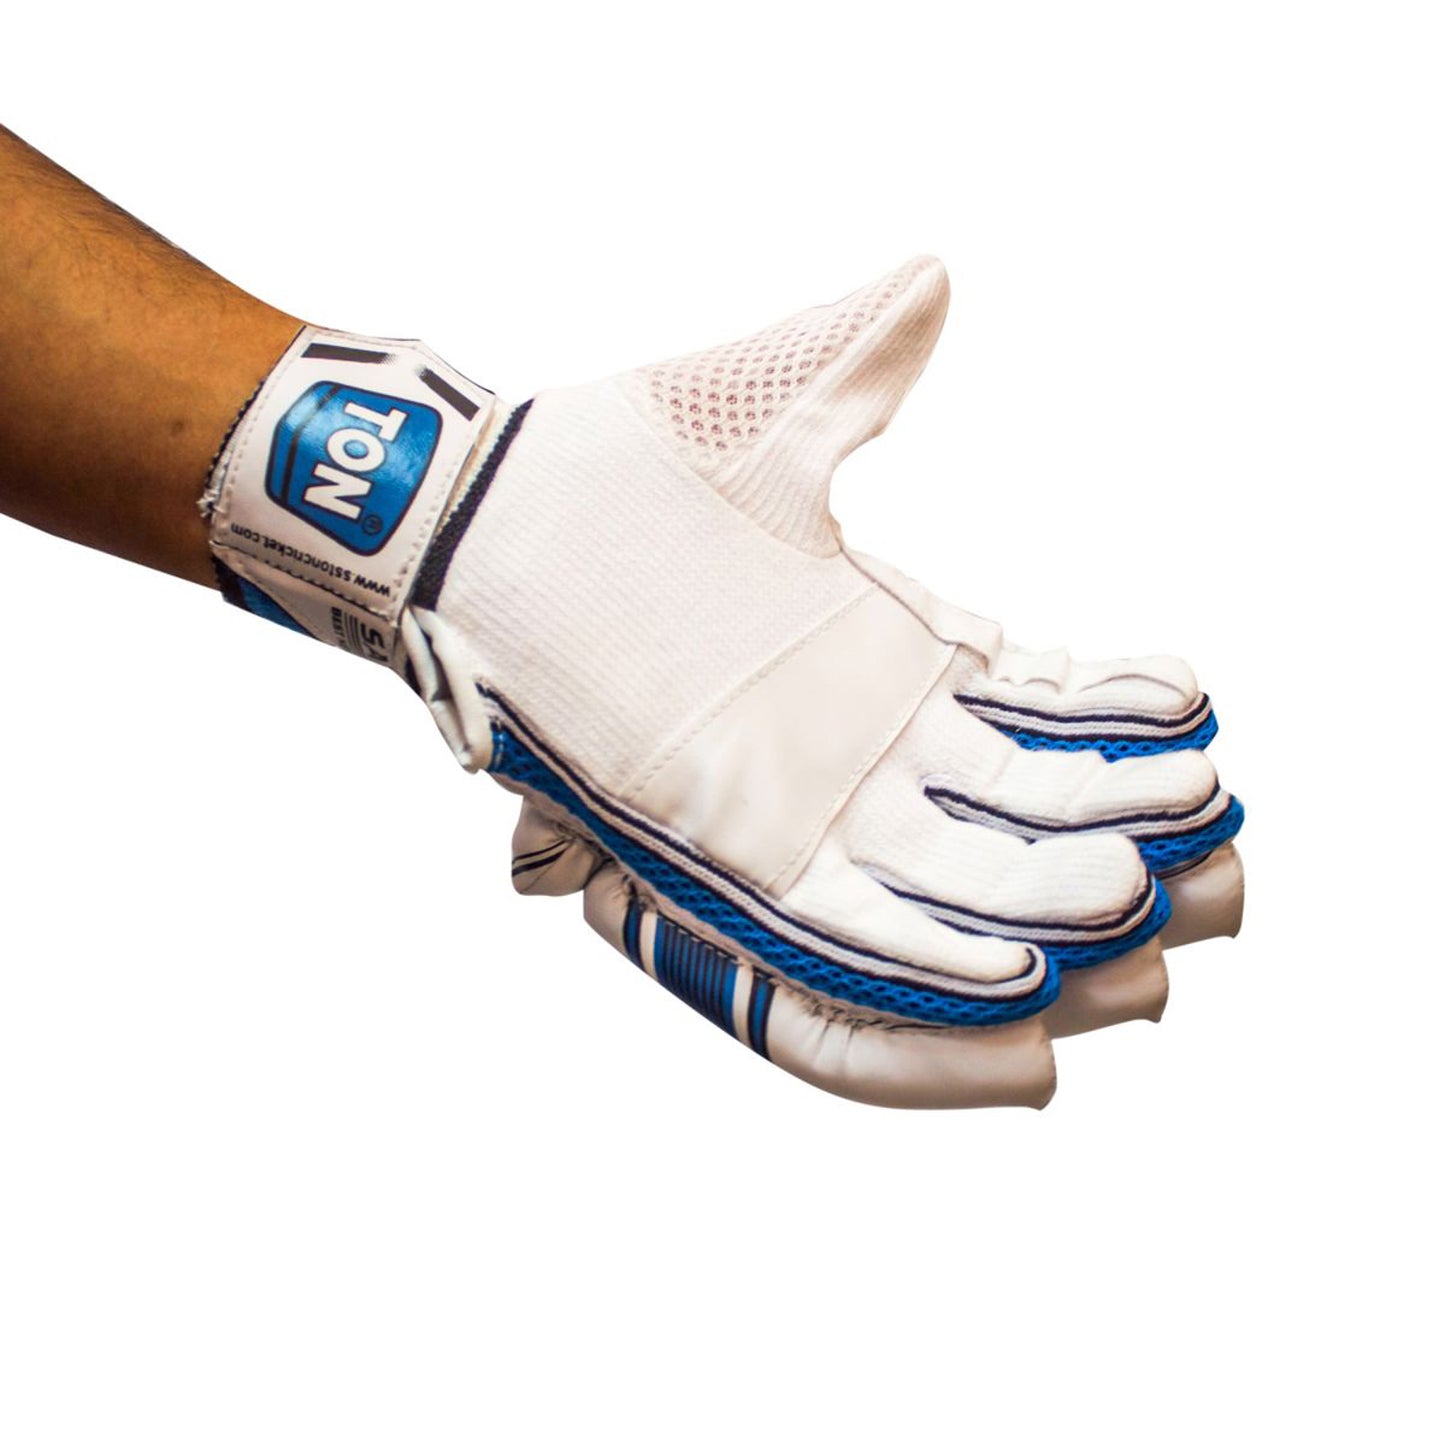 SS Ton Classic RH Cricket Batting Gloves - Best Price online Prokicksports.com